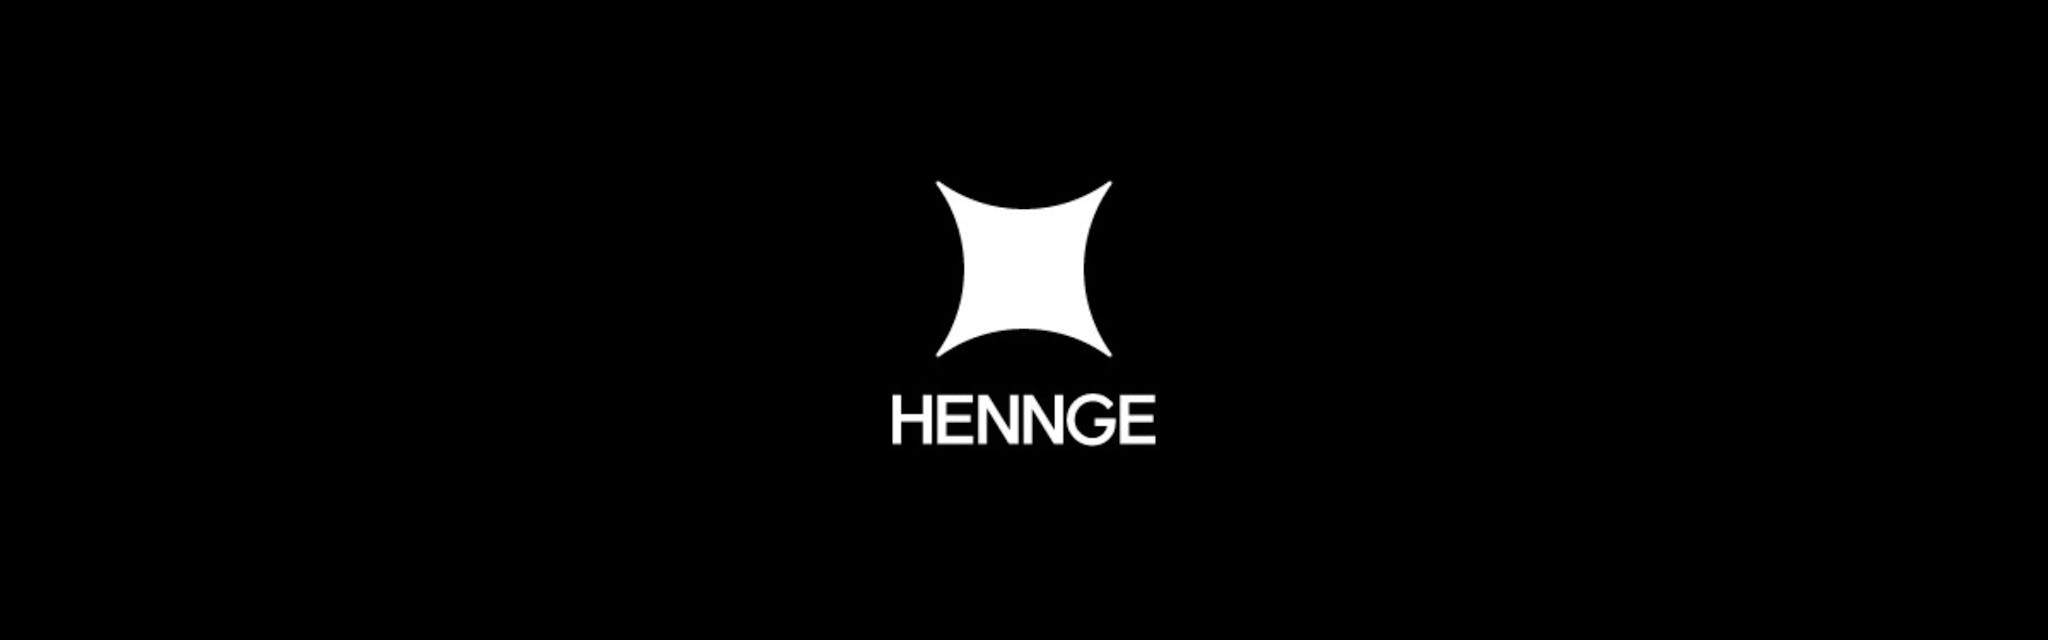 HENNGE株式会社 - カバー画像